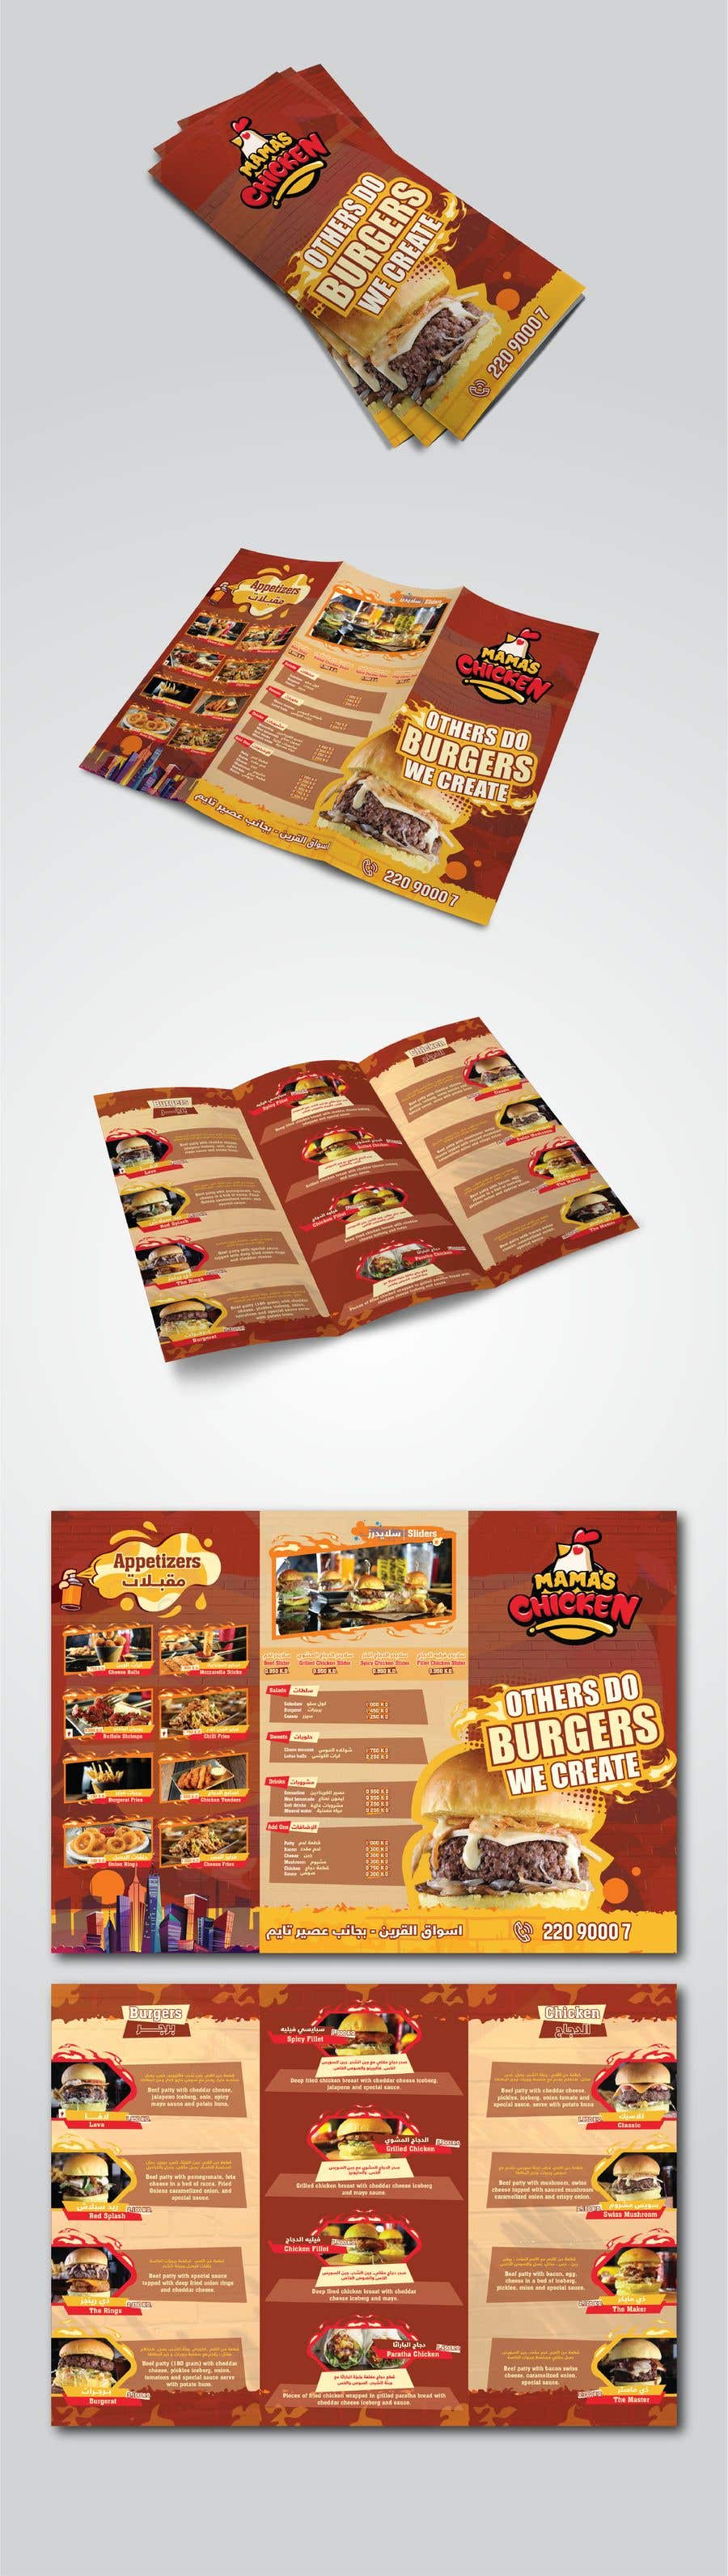 Kandidatura #44për                                                 design street style fried chicken restaurant menu
                                            